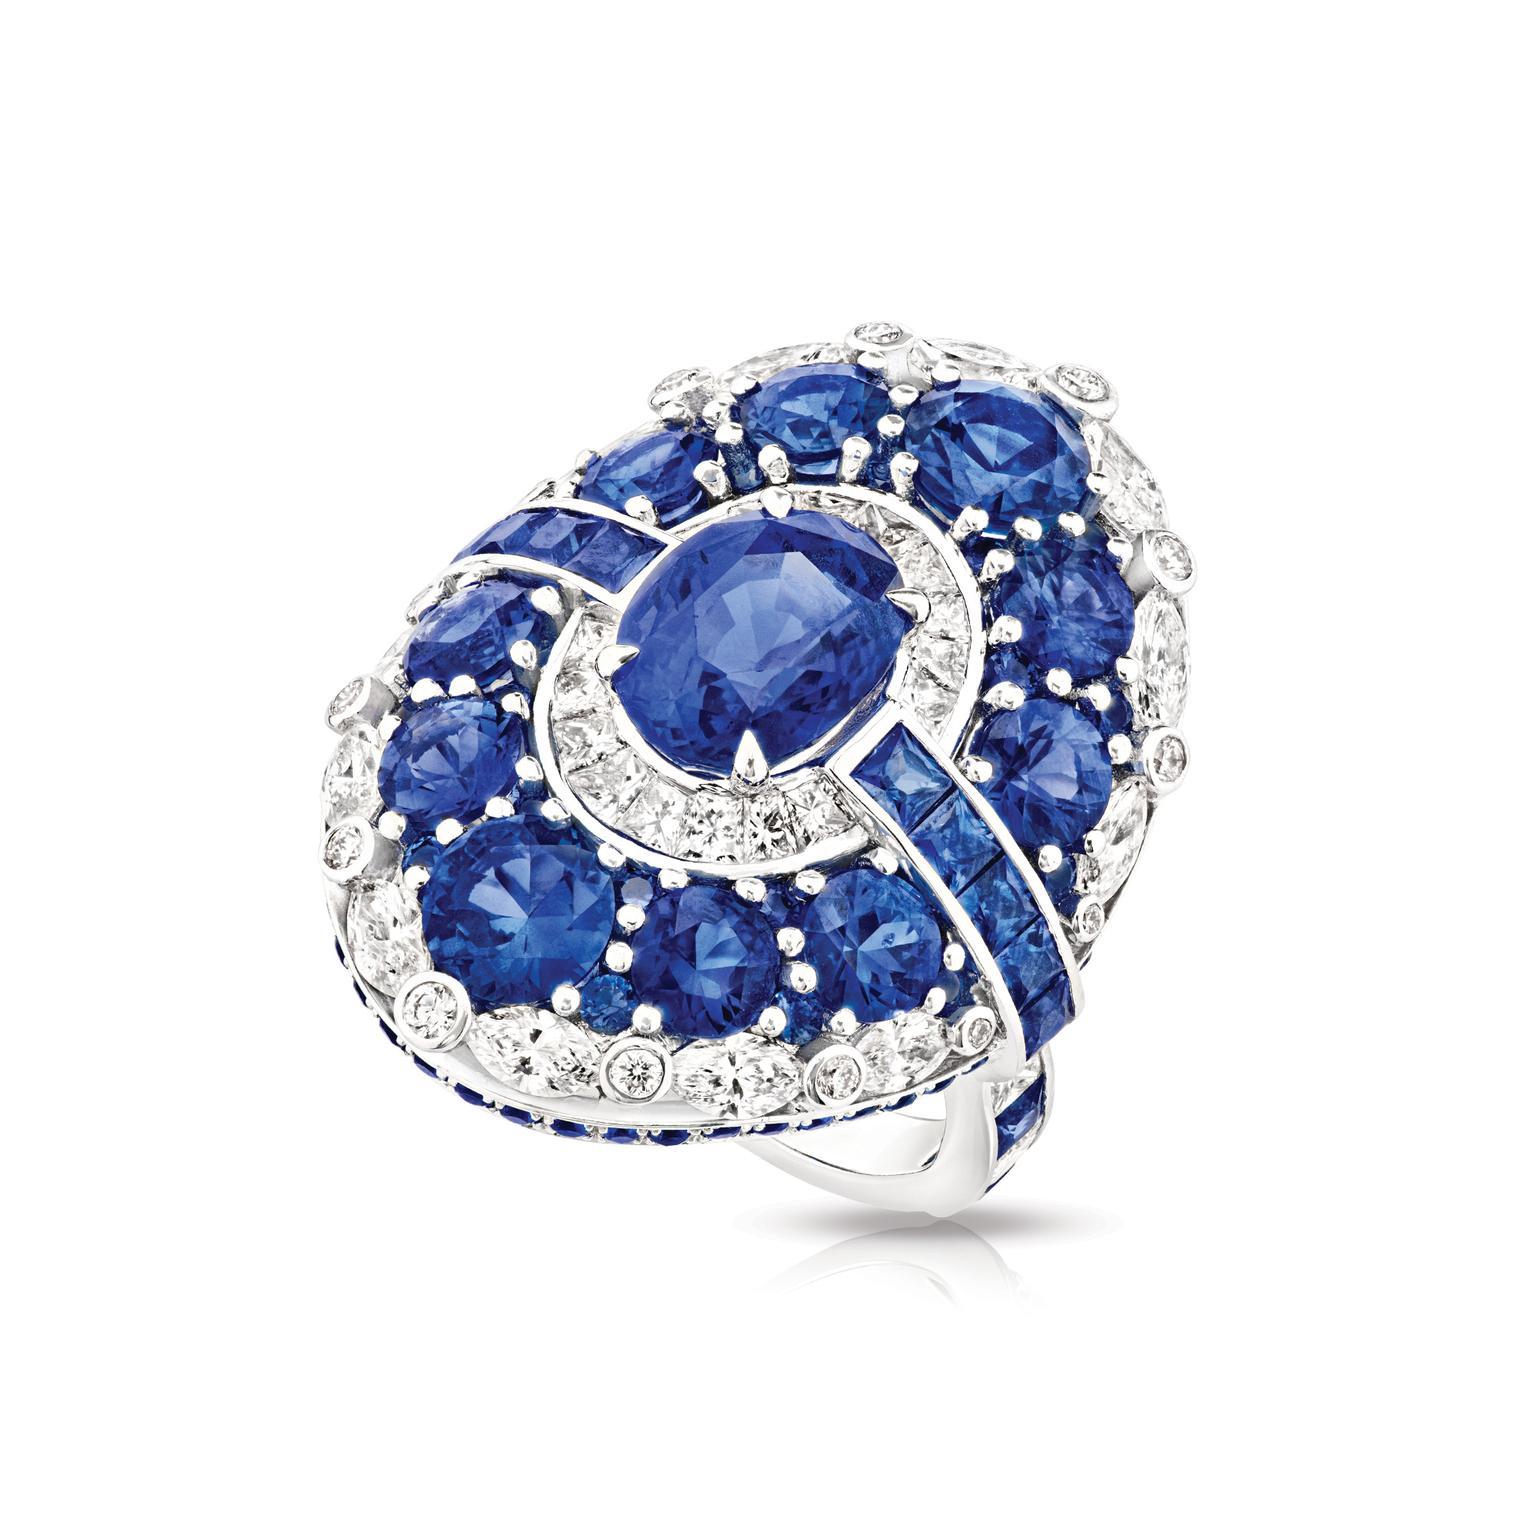 Fabergé sapphire ring